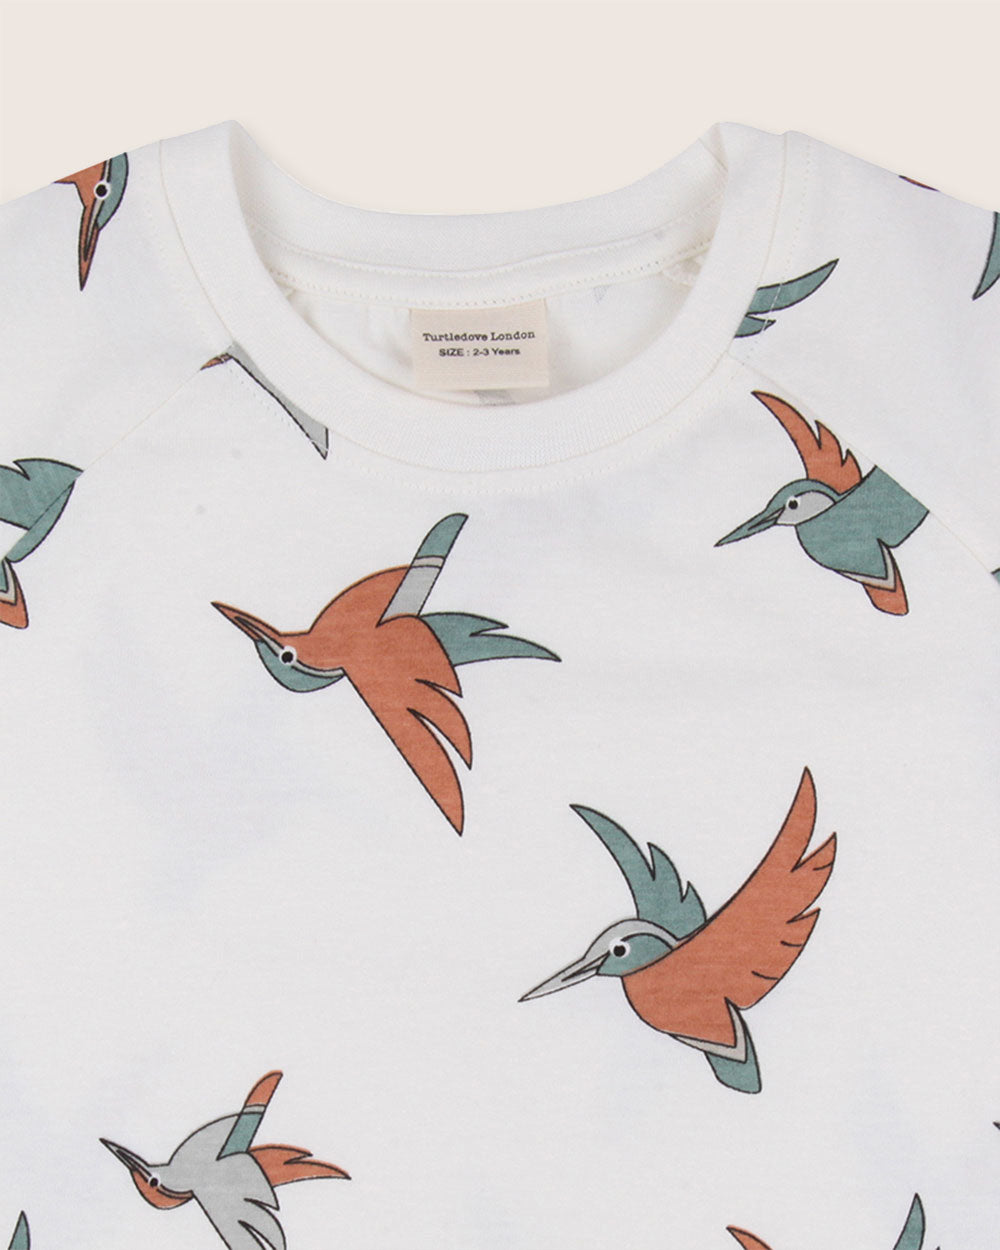 Birdsong T-Shirt